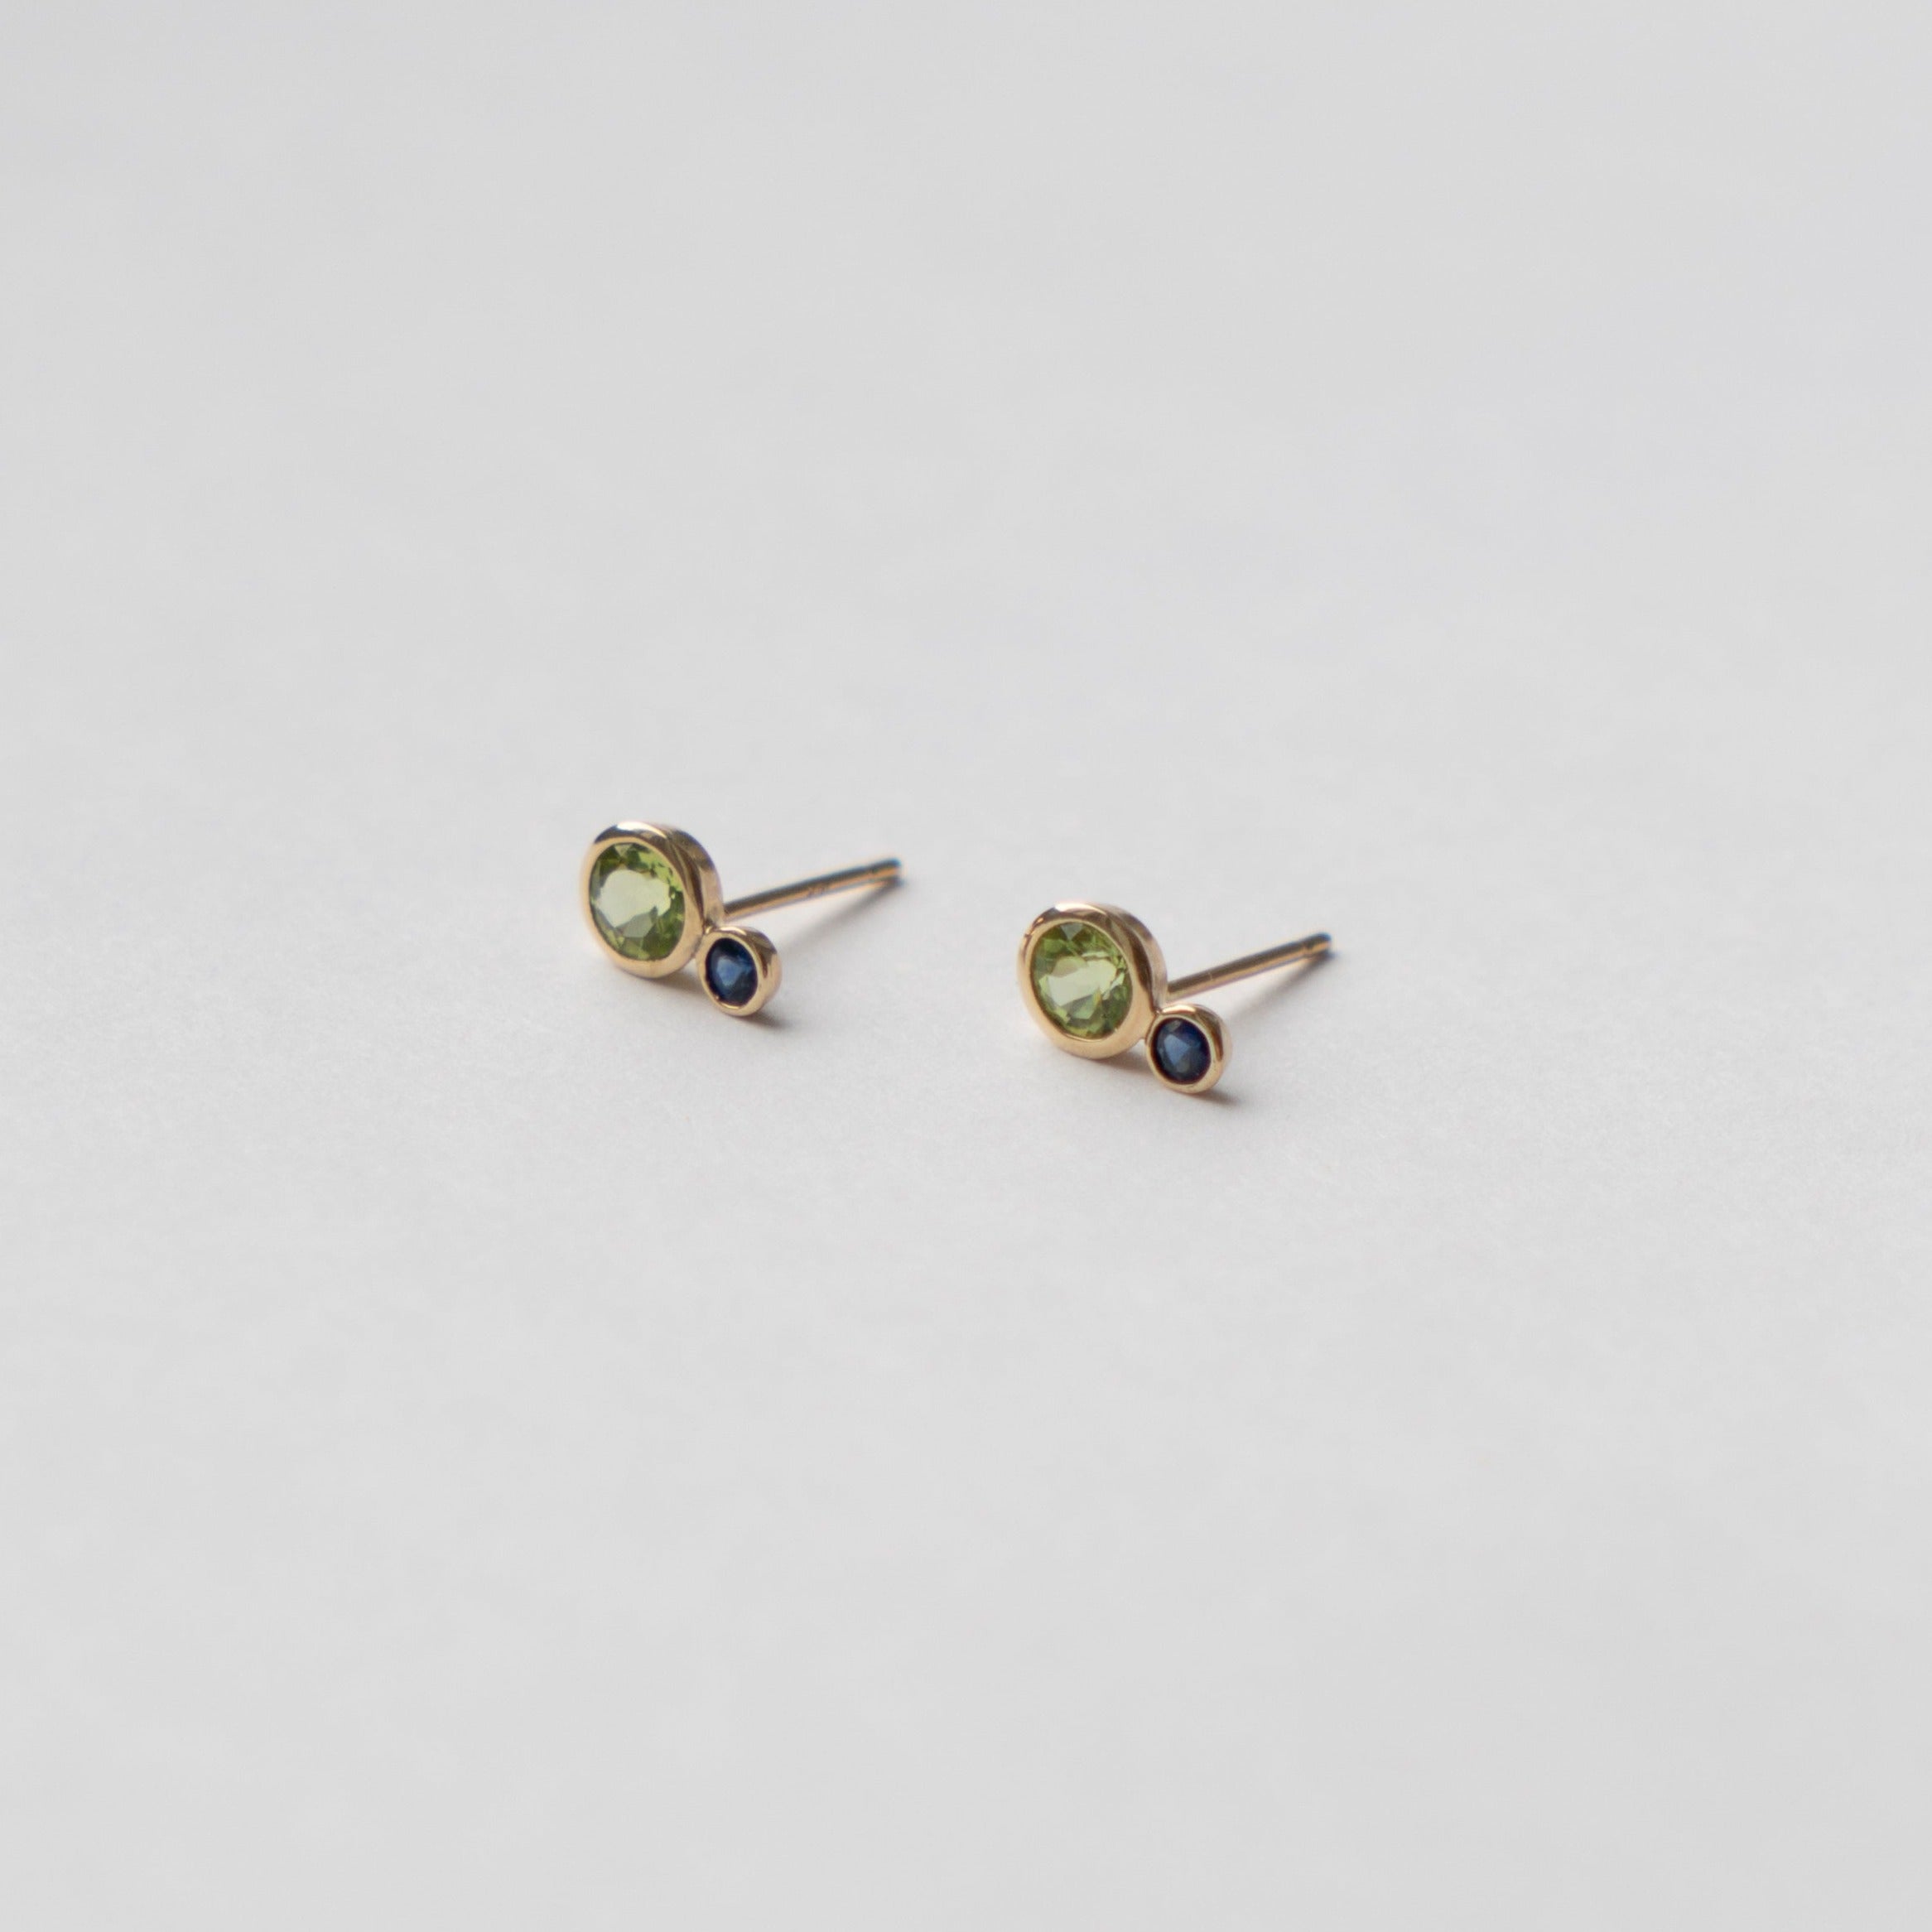 Kiki alternative stud earrings in 14k gold set with peridot and sapphire